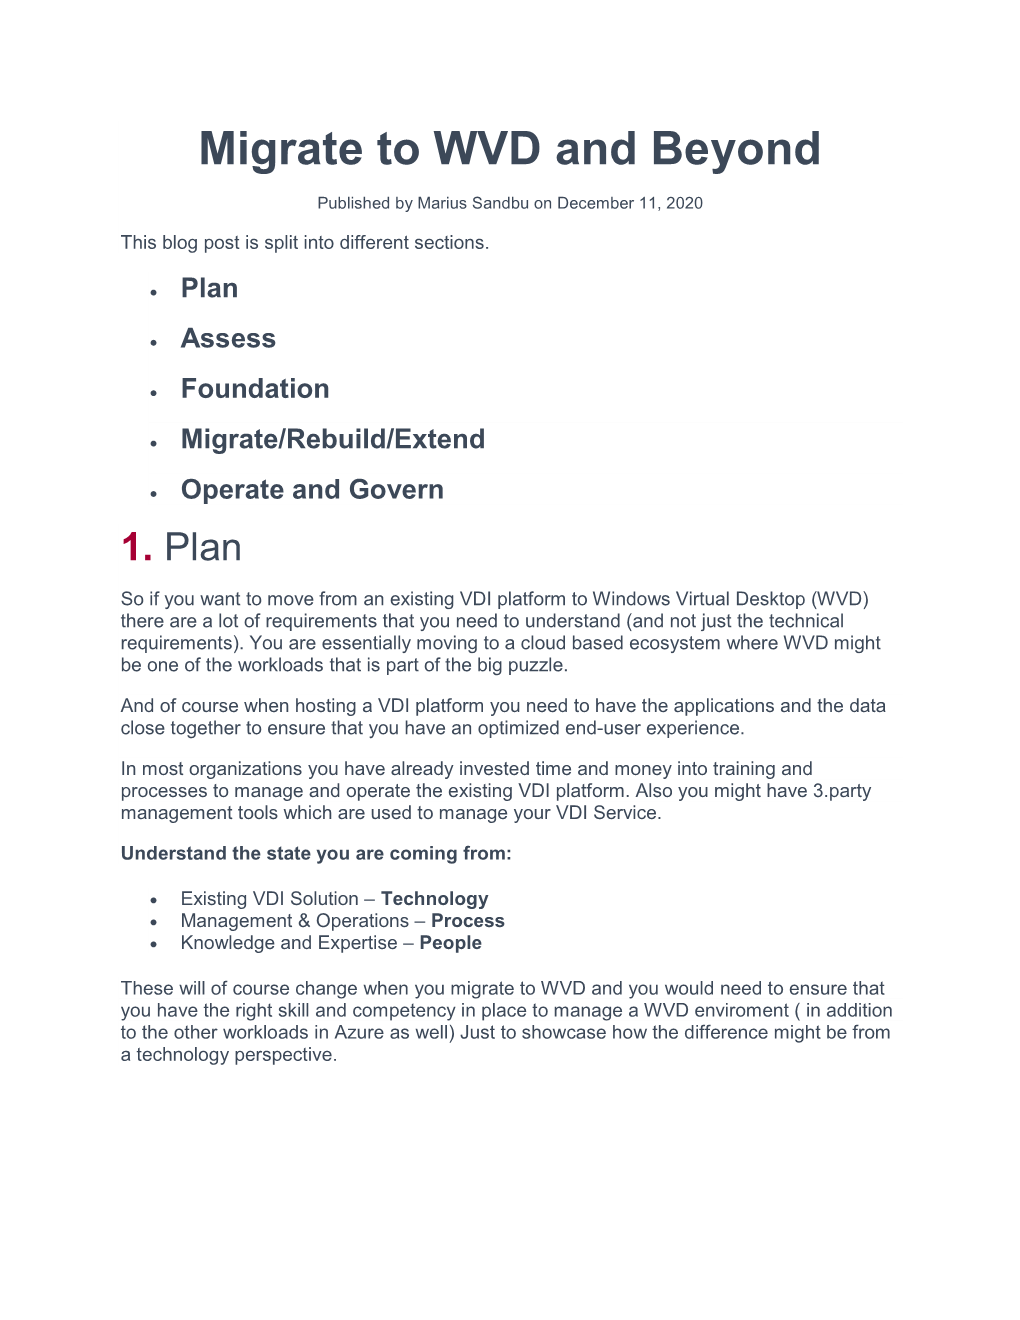 Migrate-To-WVD-And-Beyond-By-Marius-Sandbu